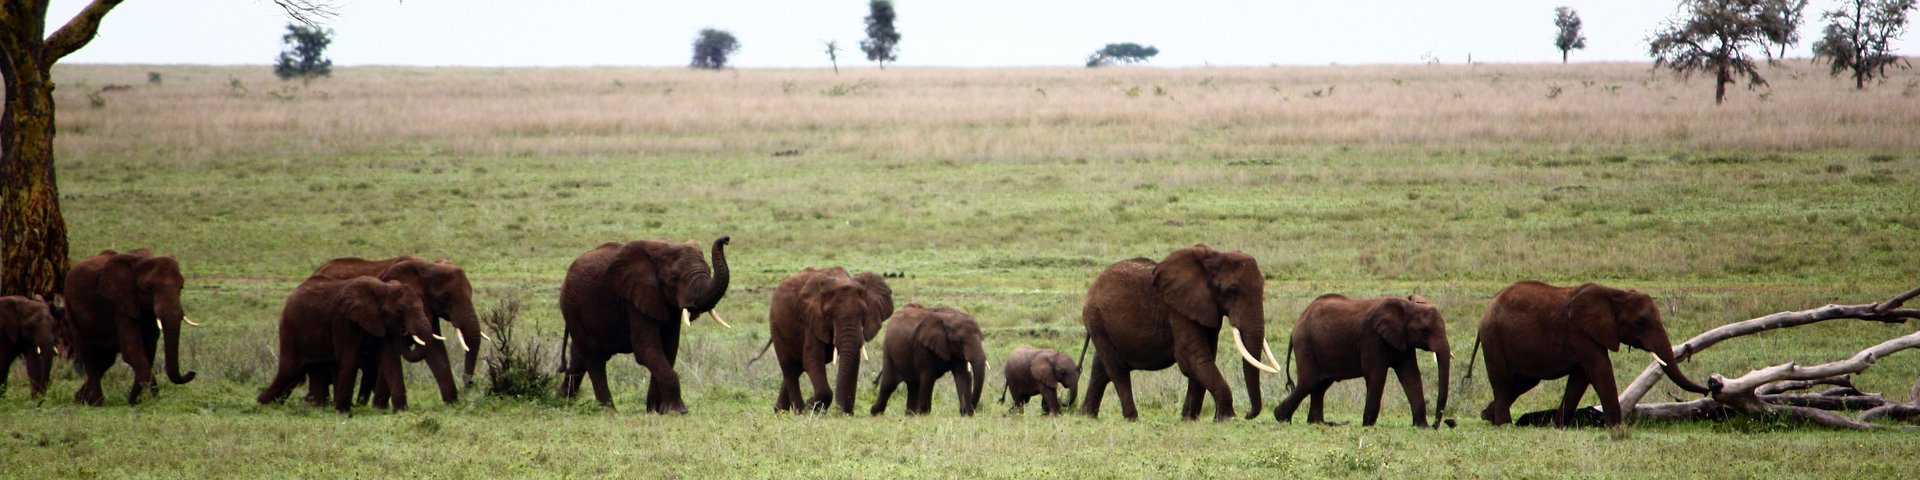 Elefanten Karawane in der Serengeti